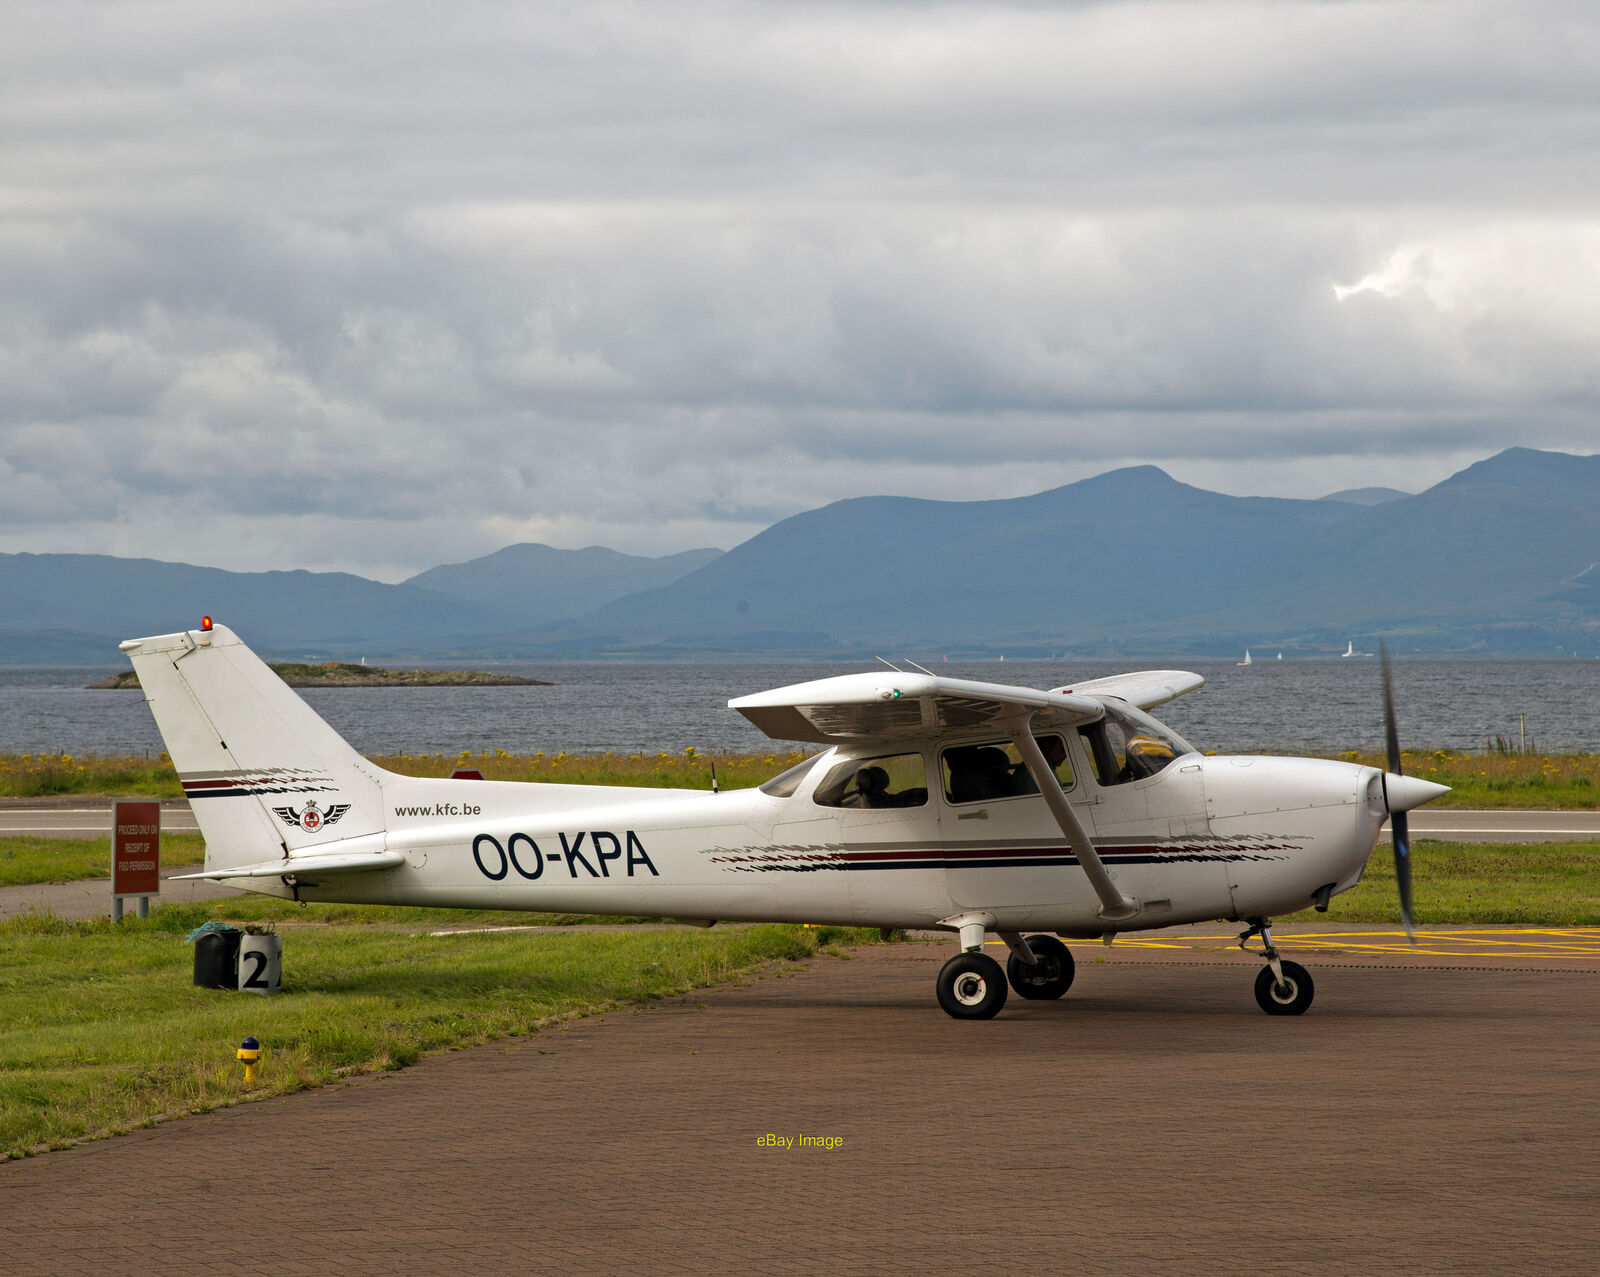 Photo 6x4 OO-KPA at Oban Airport OO-KPA a Cessna 172R Skyhawk is readied  c2014